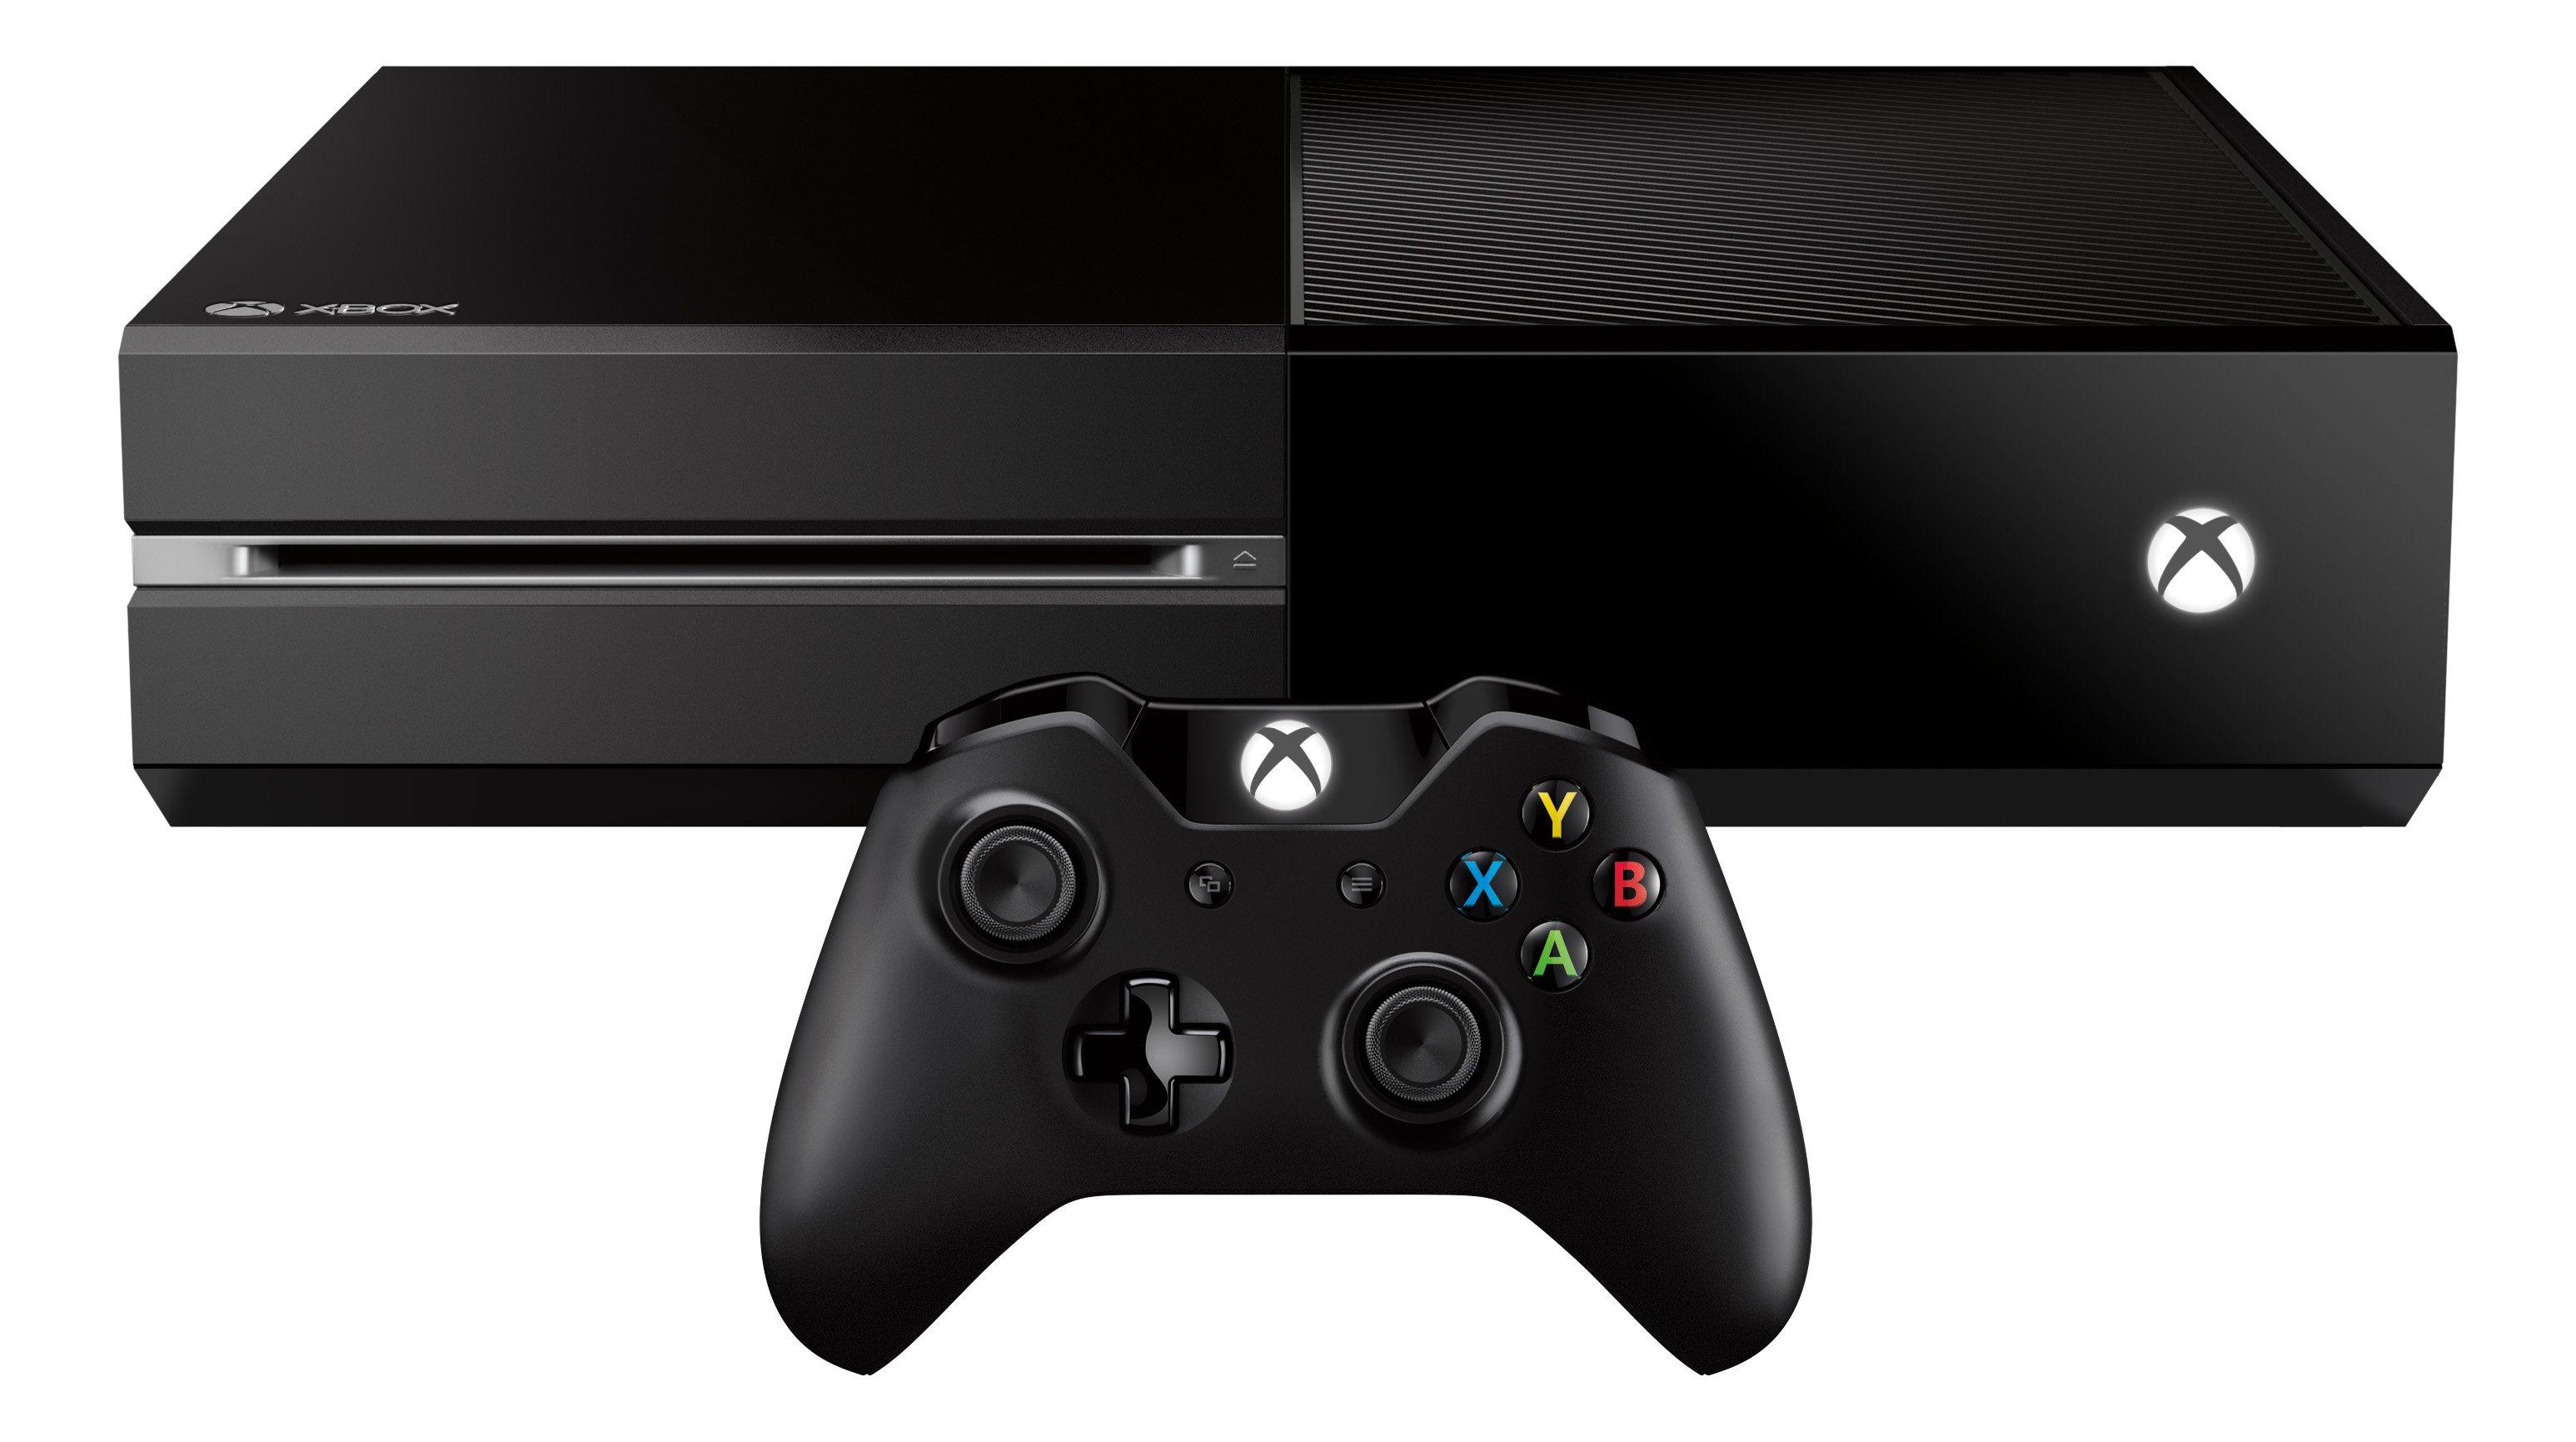 Uitbeelding premie Neerwaarts Microsoft Xbox One 500GB Console Black with Original Controller | GameStop